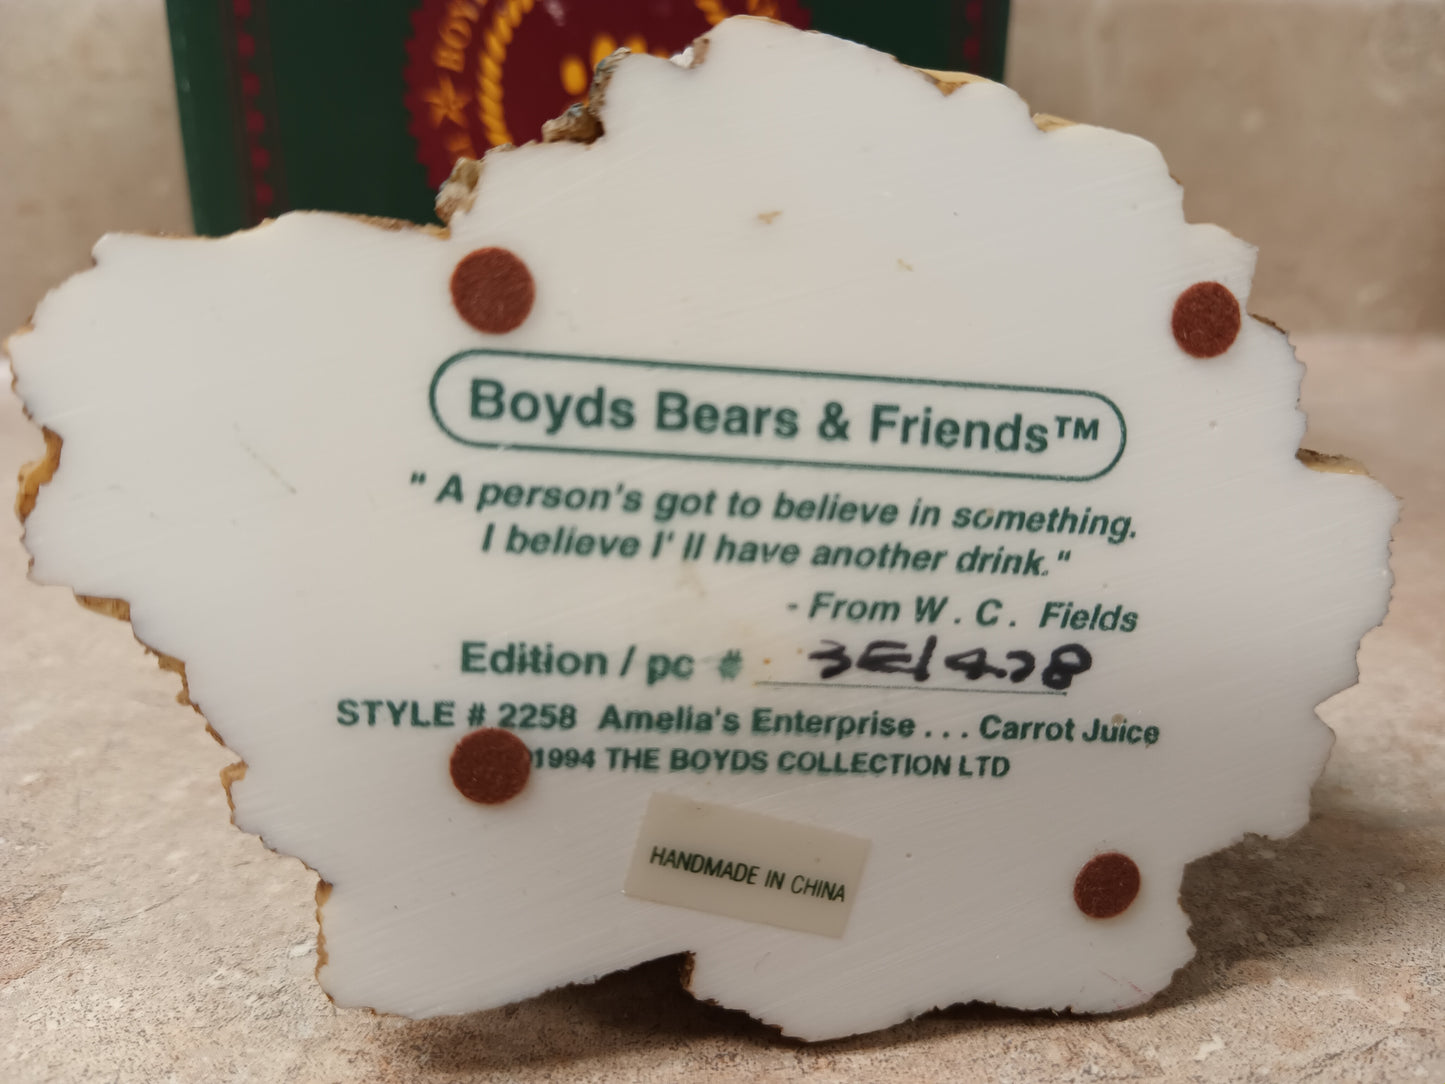 Boyds Bears Amelia's Enterprise Carrot Juice